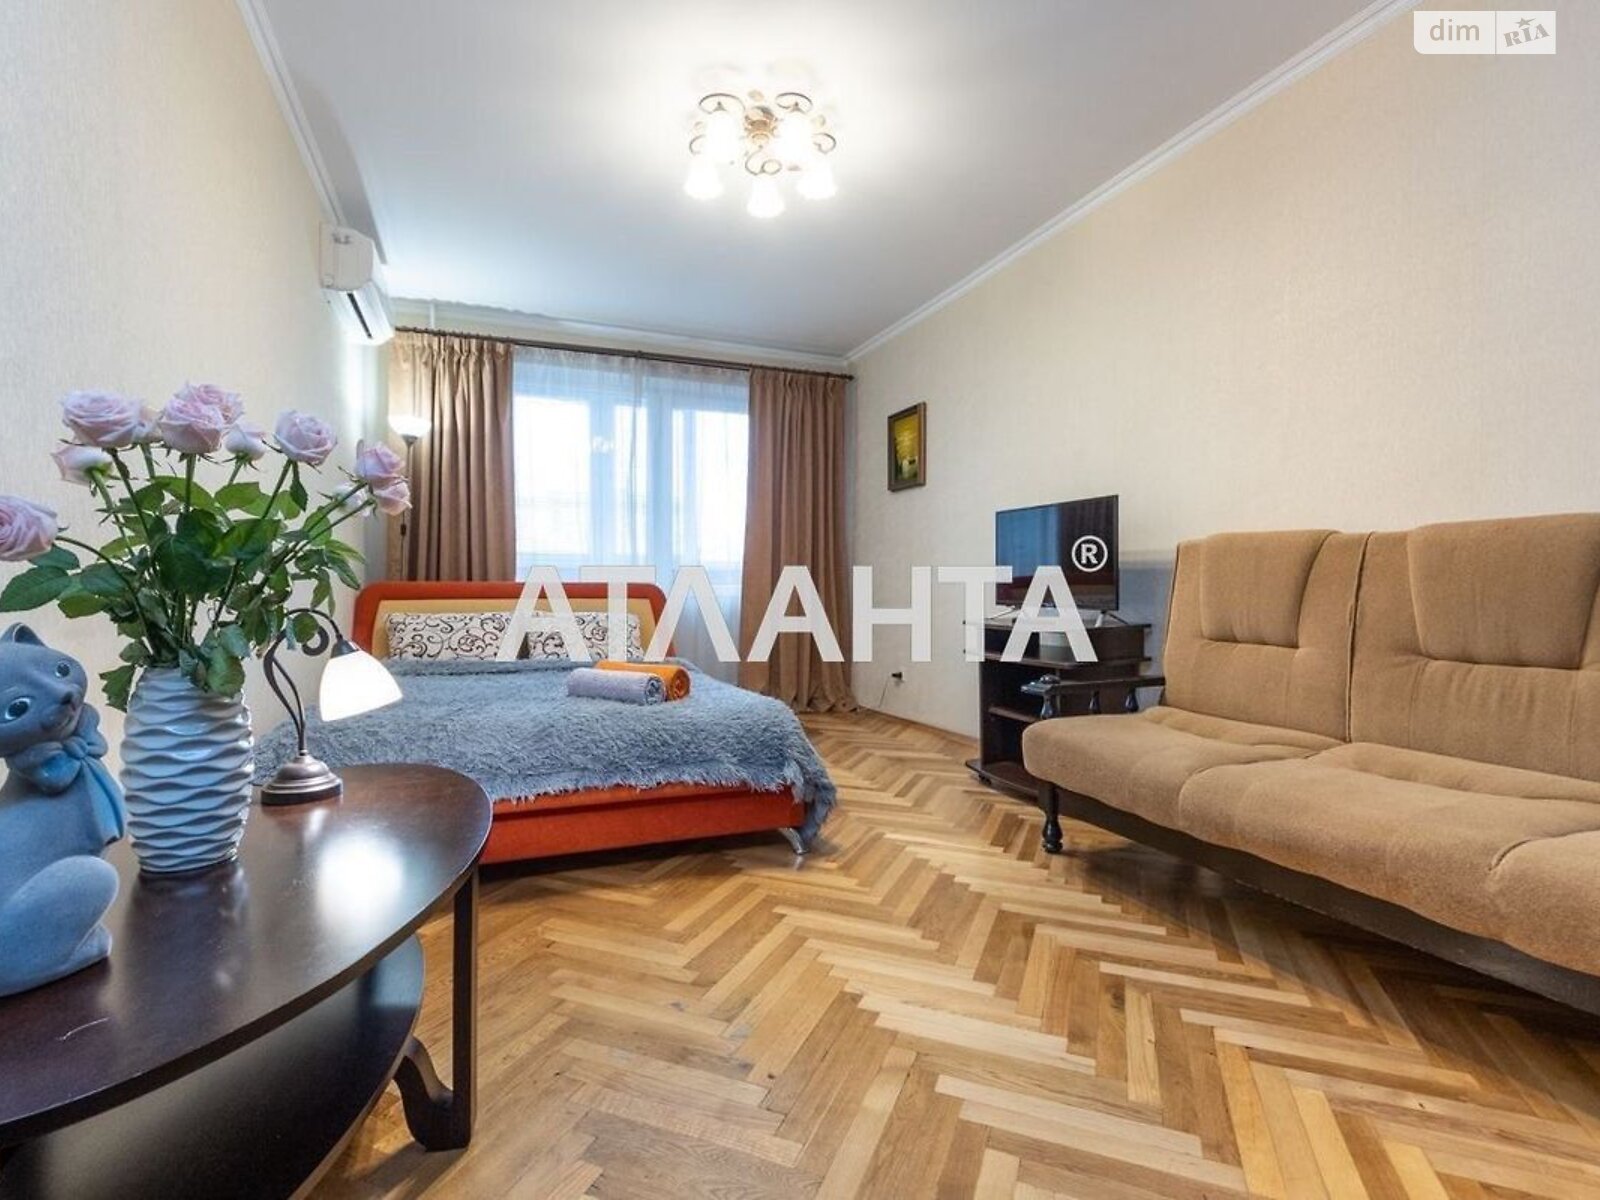 Продажа двухкомнатной квартиры в Киеве, на ул. Александра Архипенко 8А, район Оболонский фото 1